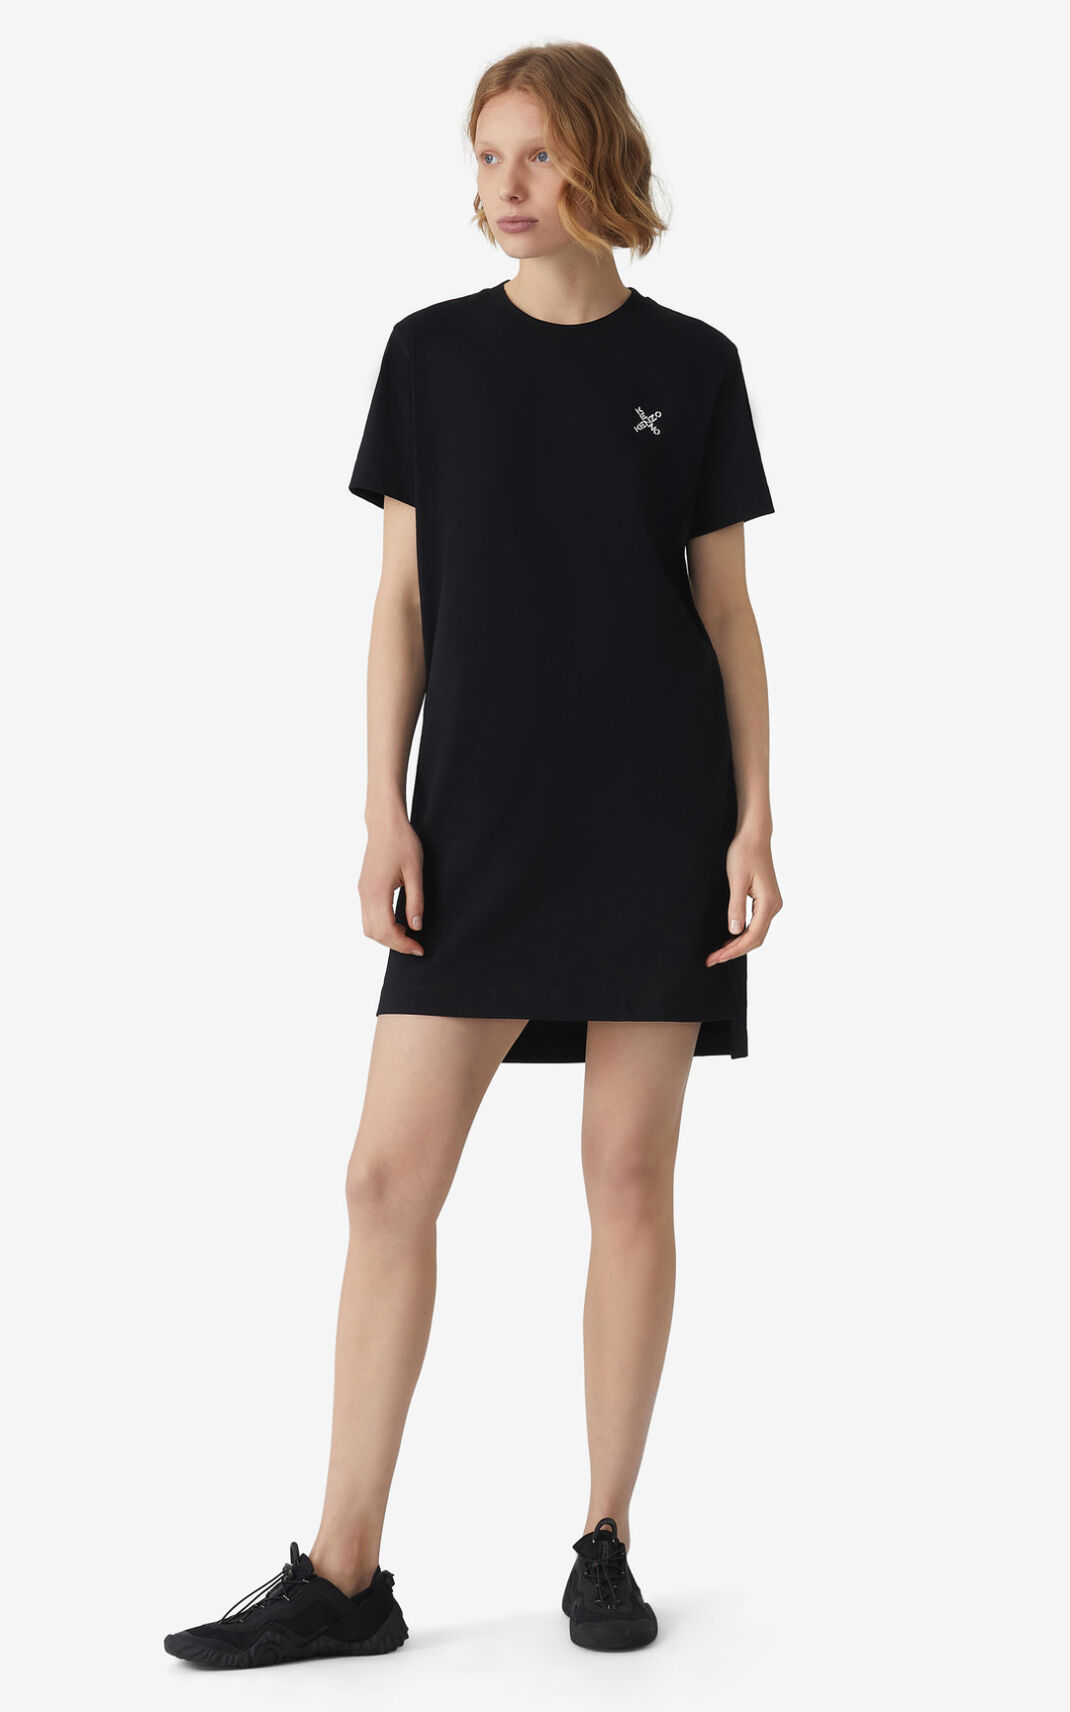 Kenzo Sport Little X t shirt Dress Black For Womens 9736DSGCB